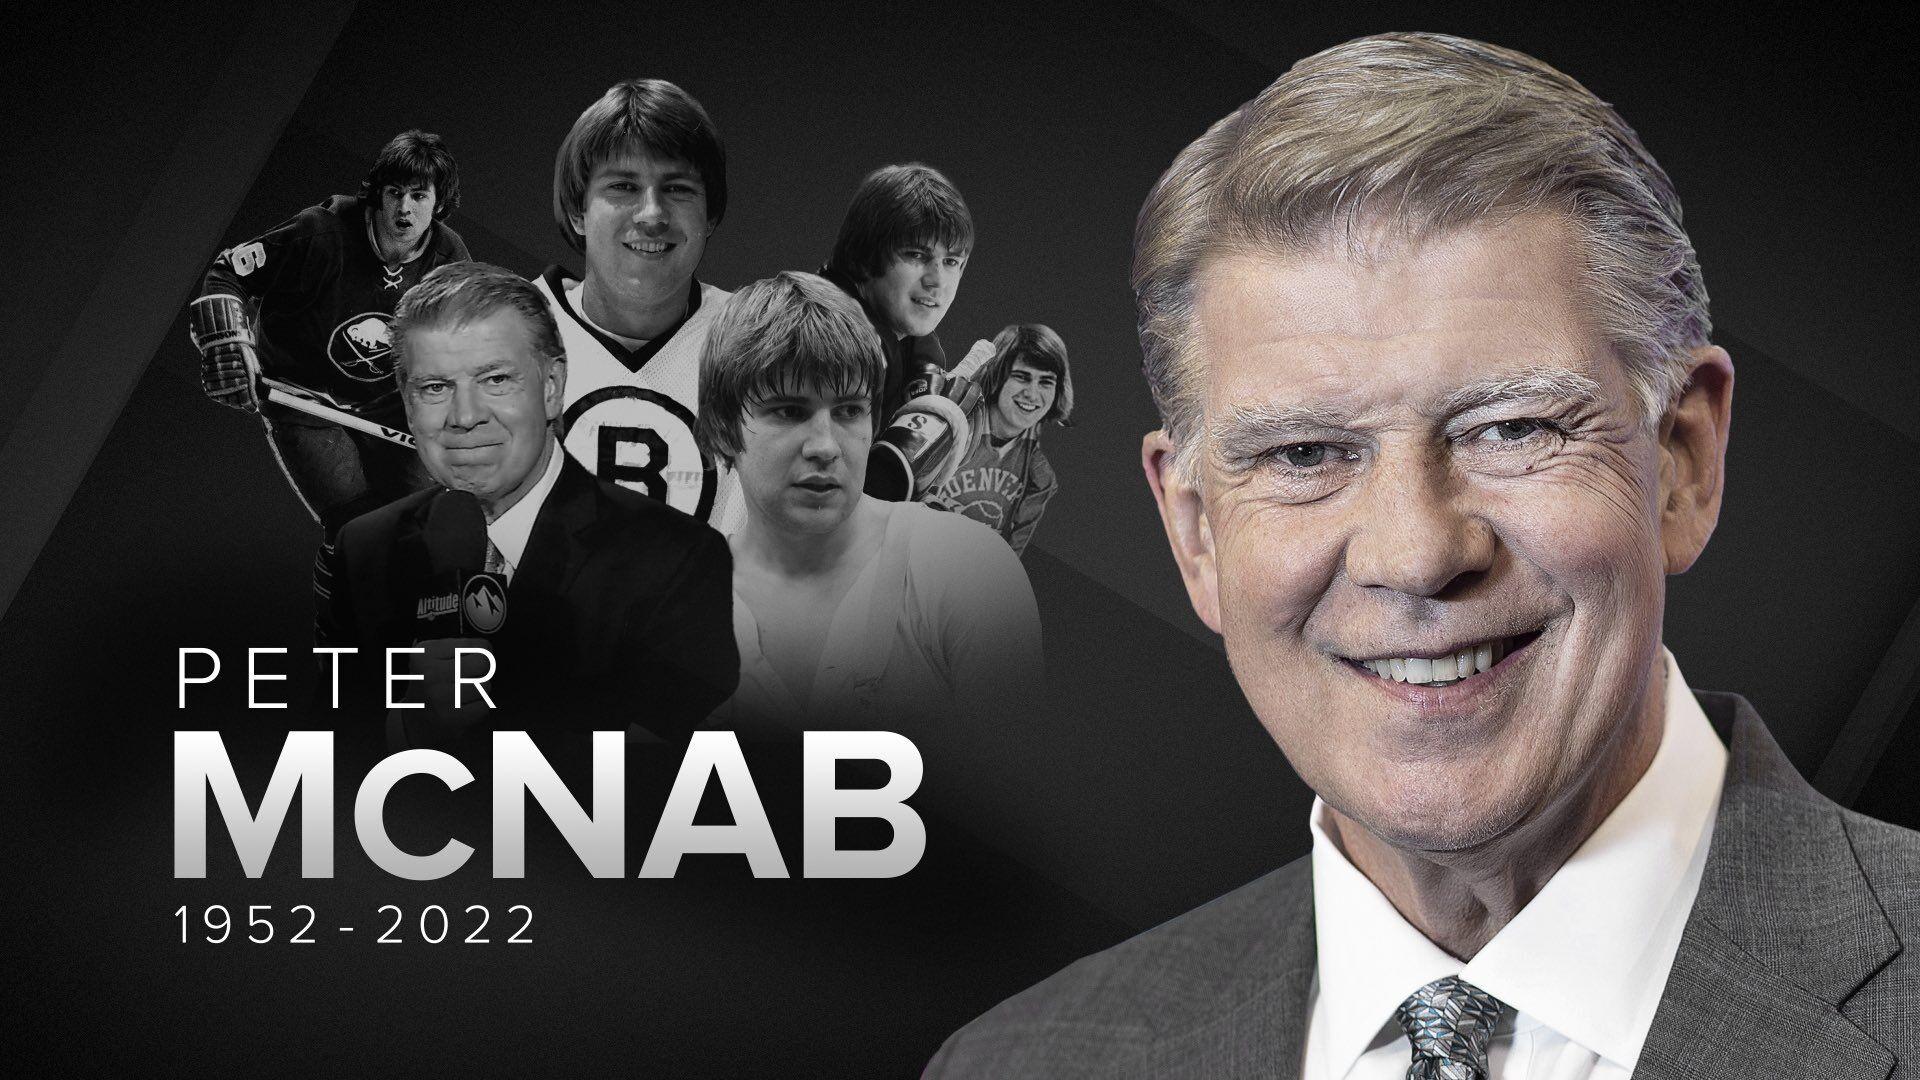 Peter McNab obituary: former Boston Bruins forward dies at 70 